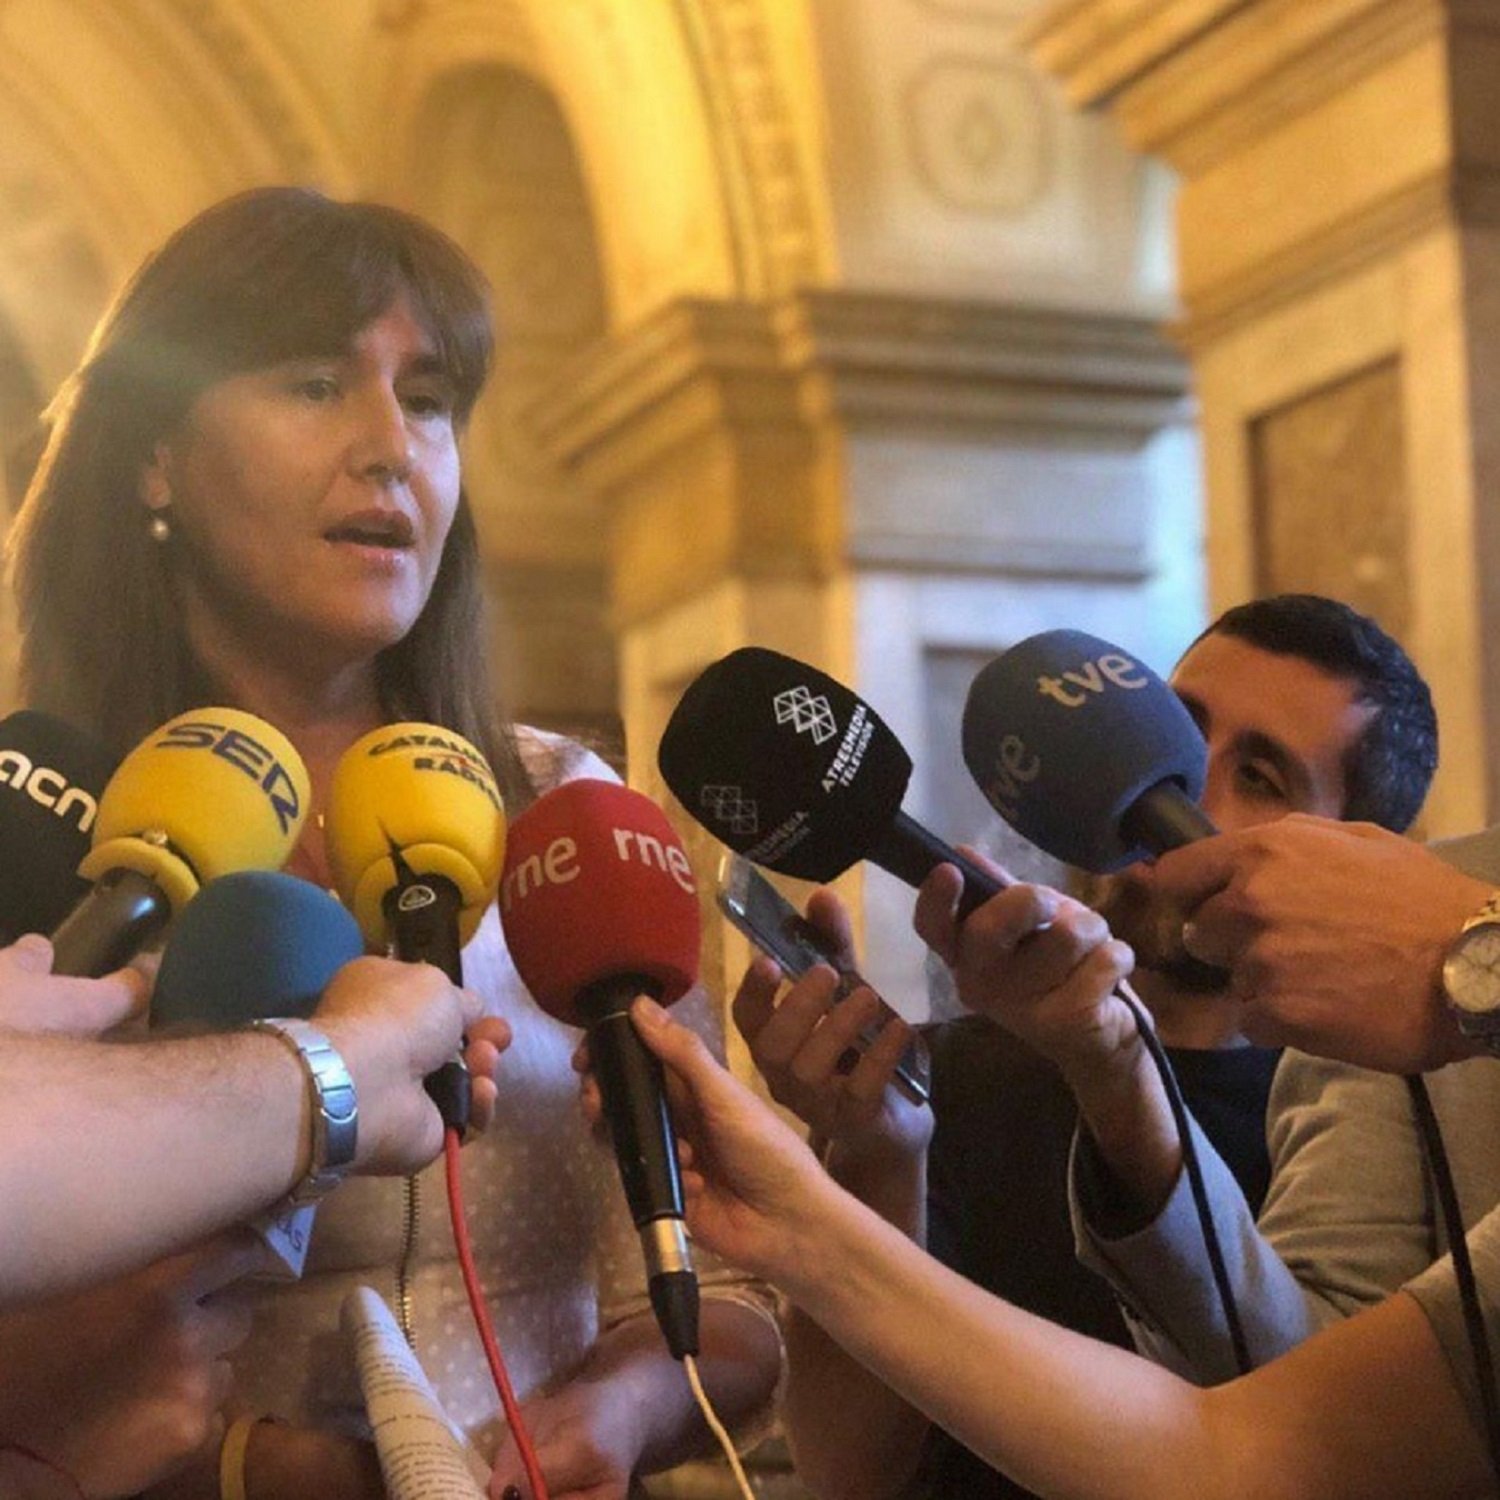 Laura Borràs deja KO a un presentador de TV al ser preguntada por Felipe VI